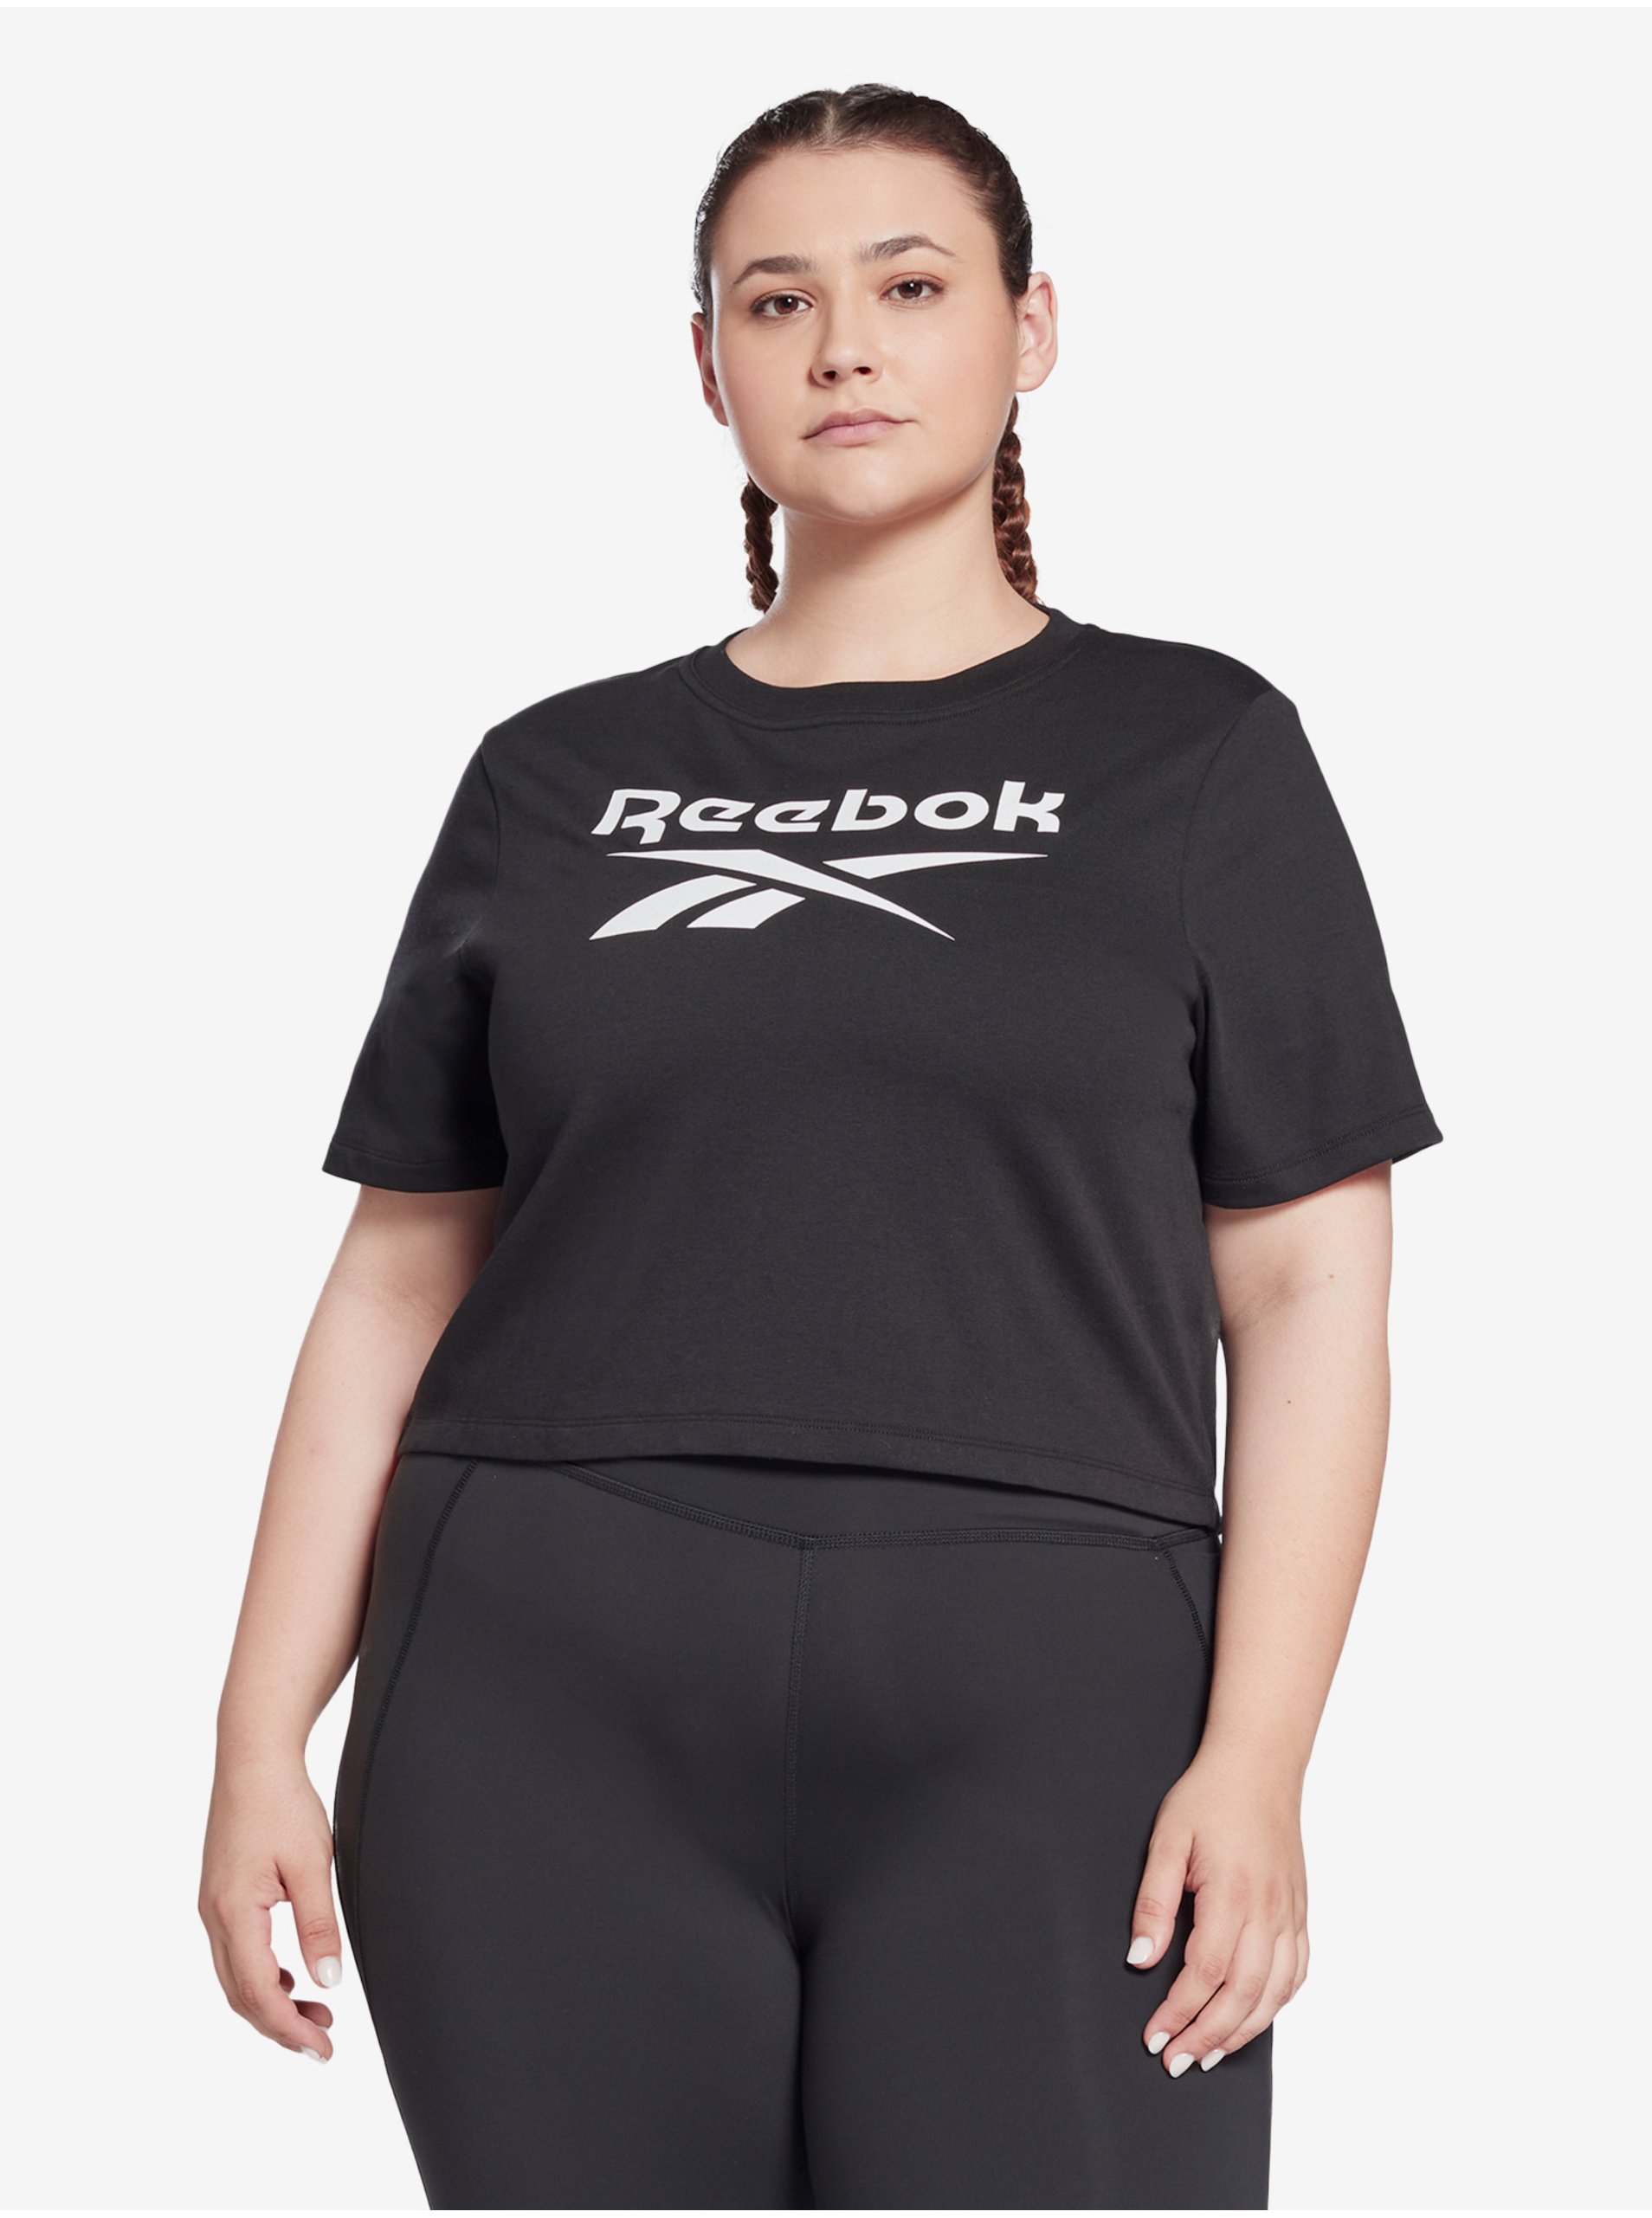 Lacno Čierne dámske športové tričko Reebok